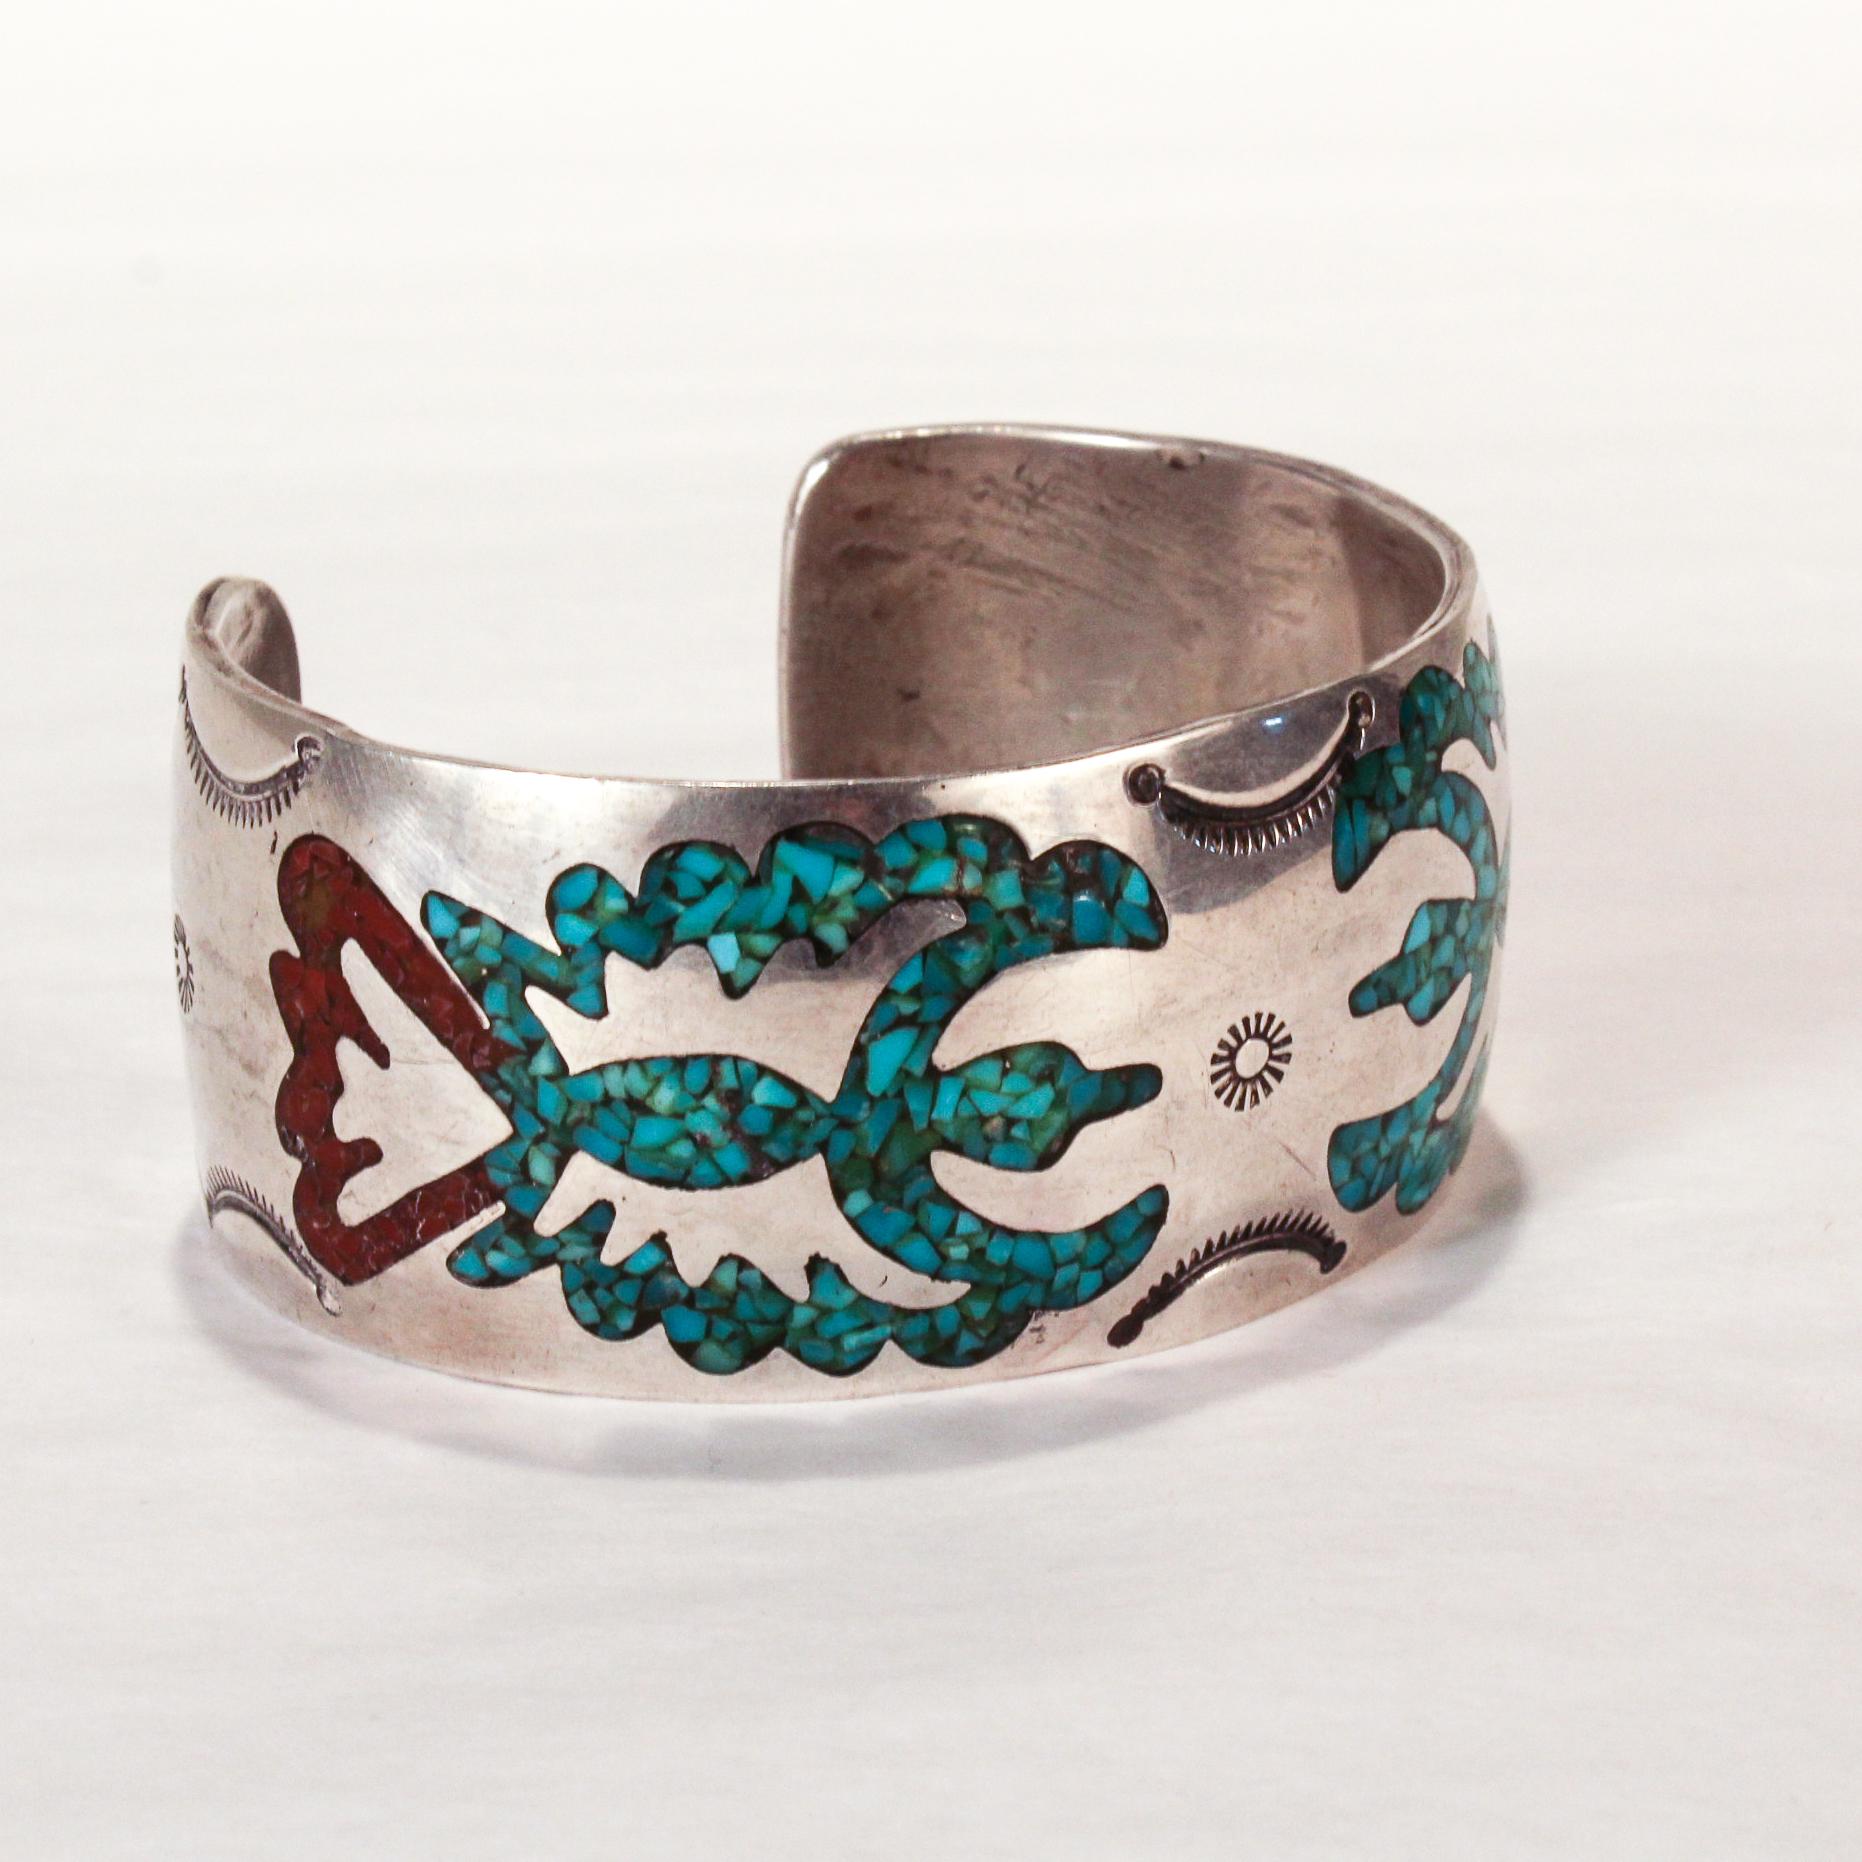 Turquoise Bracelet Old Pawn Indian Bracelet Vintage Native American Old Pawn Sterling Silver Turquoise Cuff Bracelet Navajo